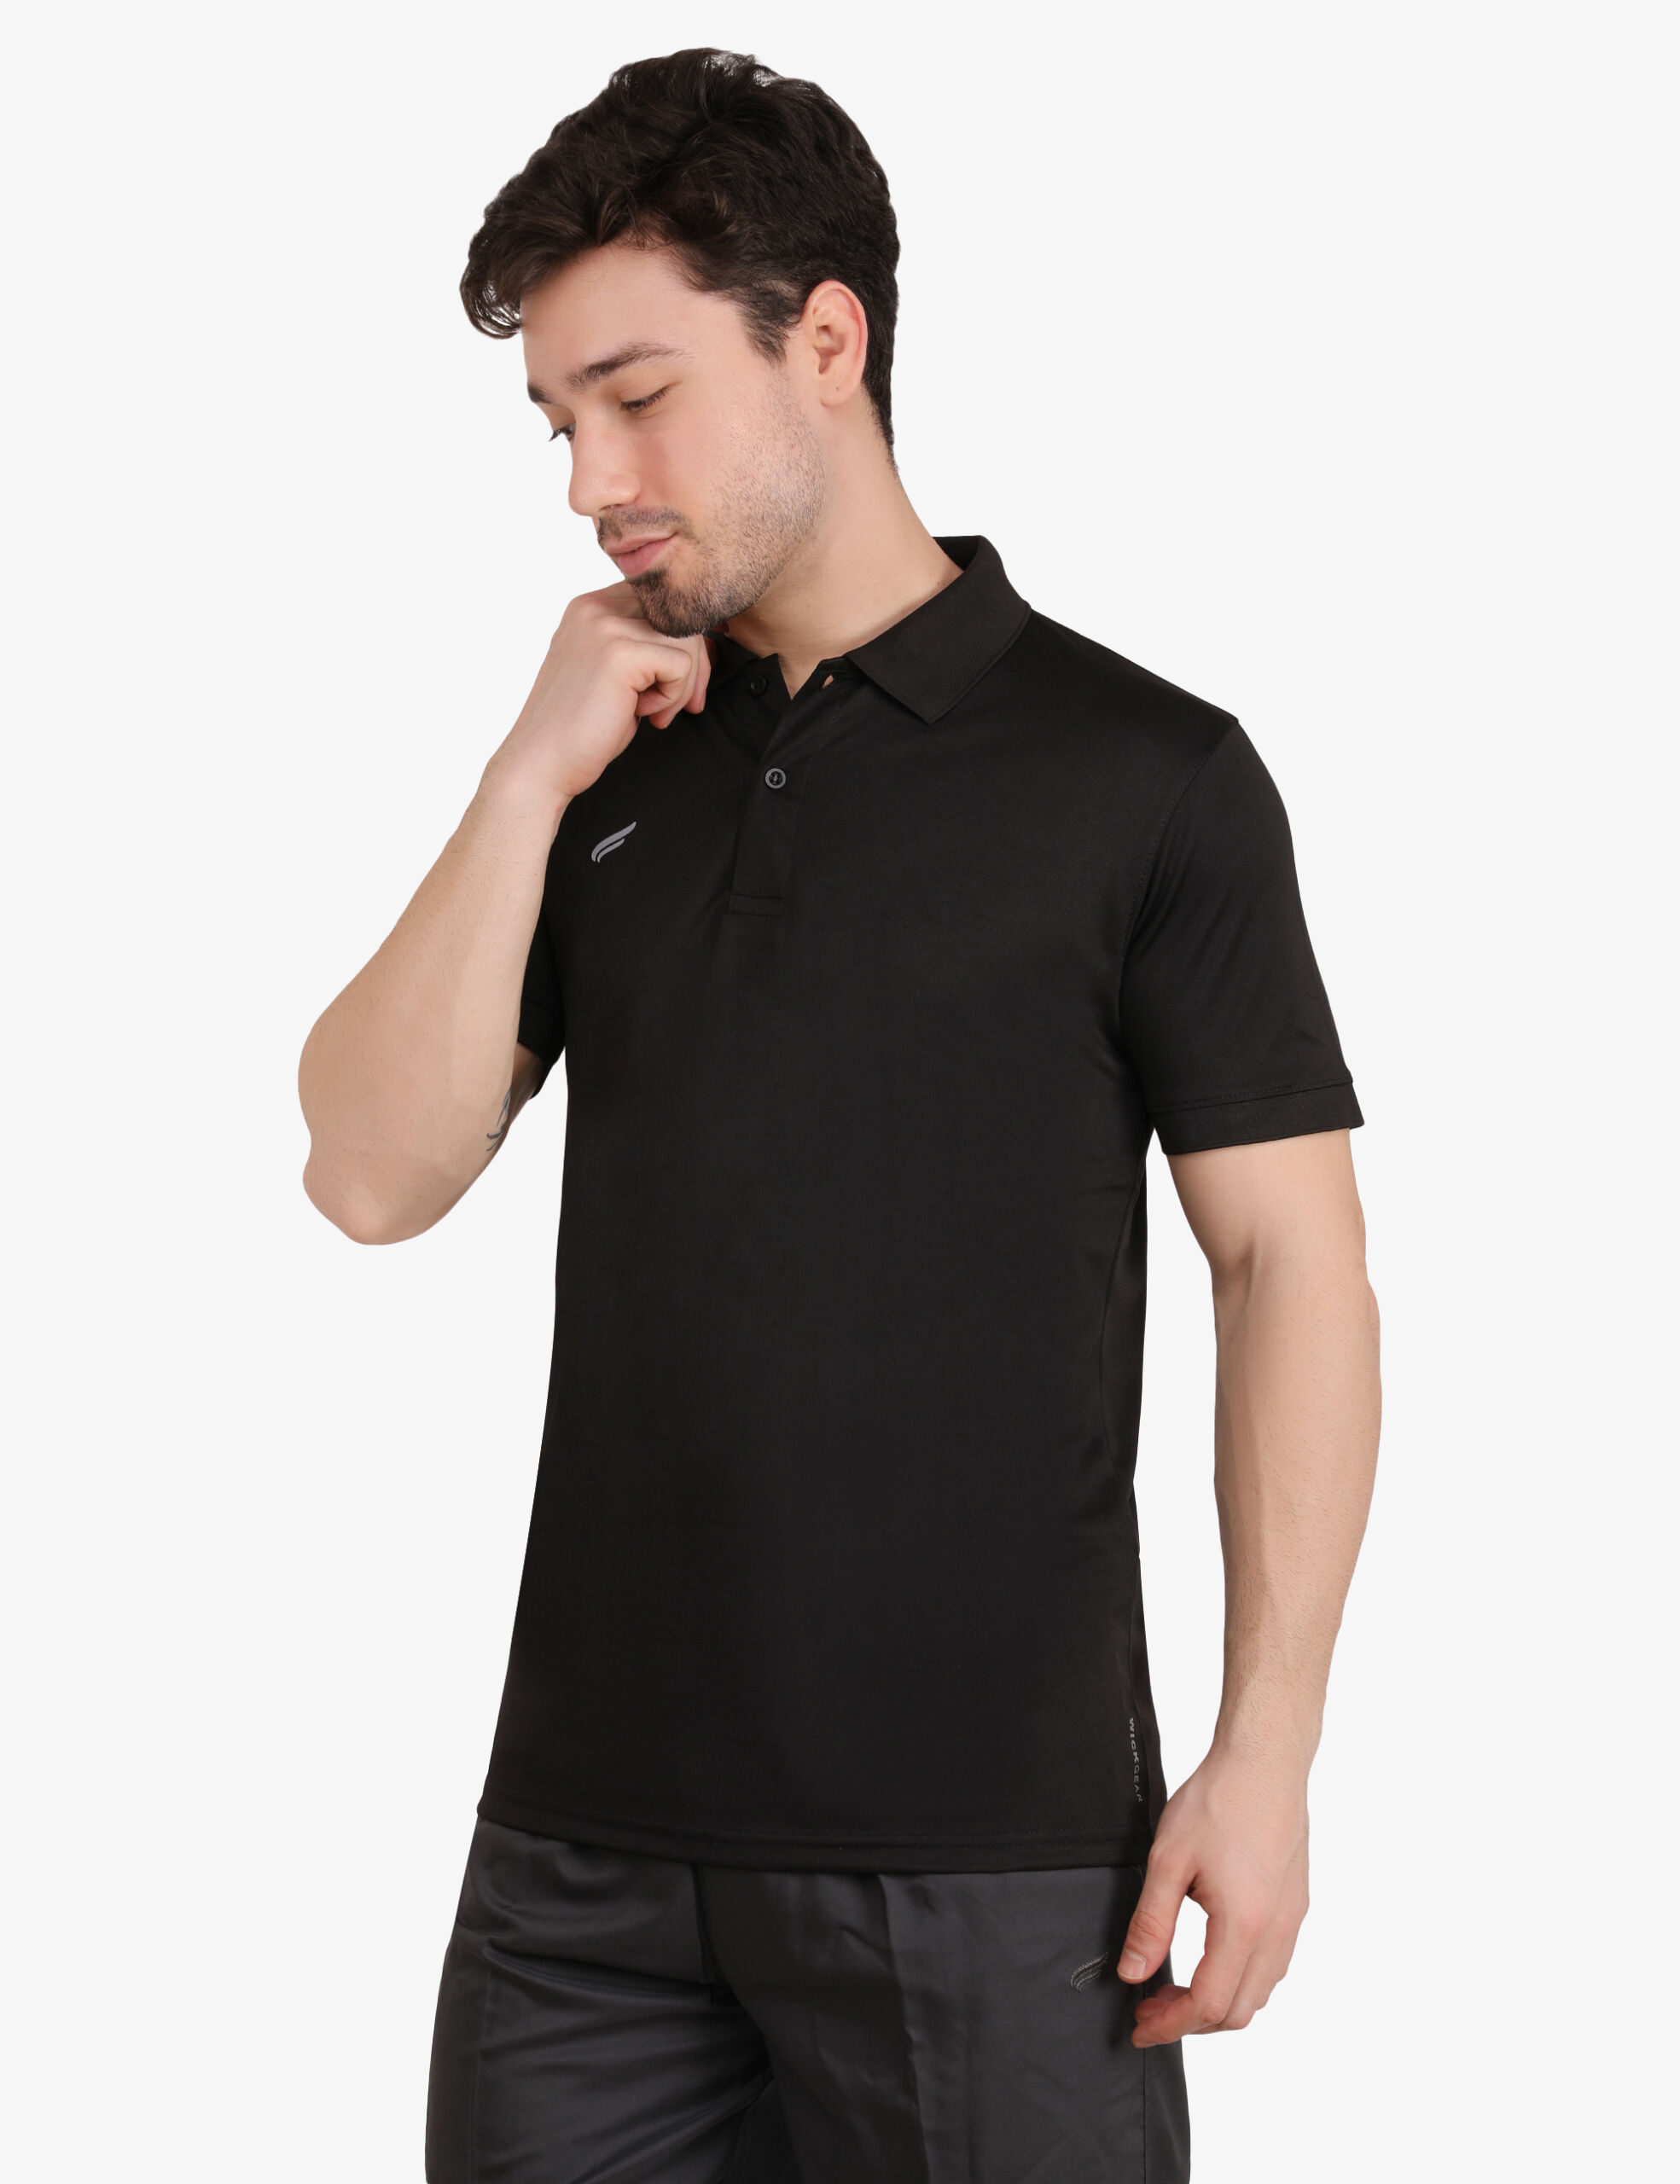 ASI GenX Black T-Shirt for Men